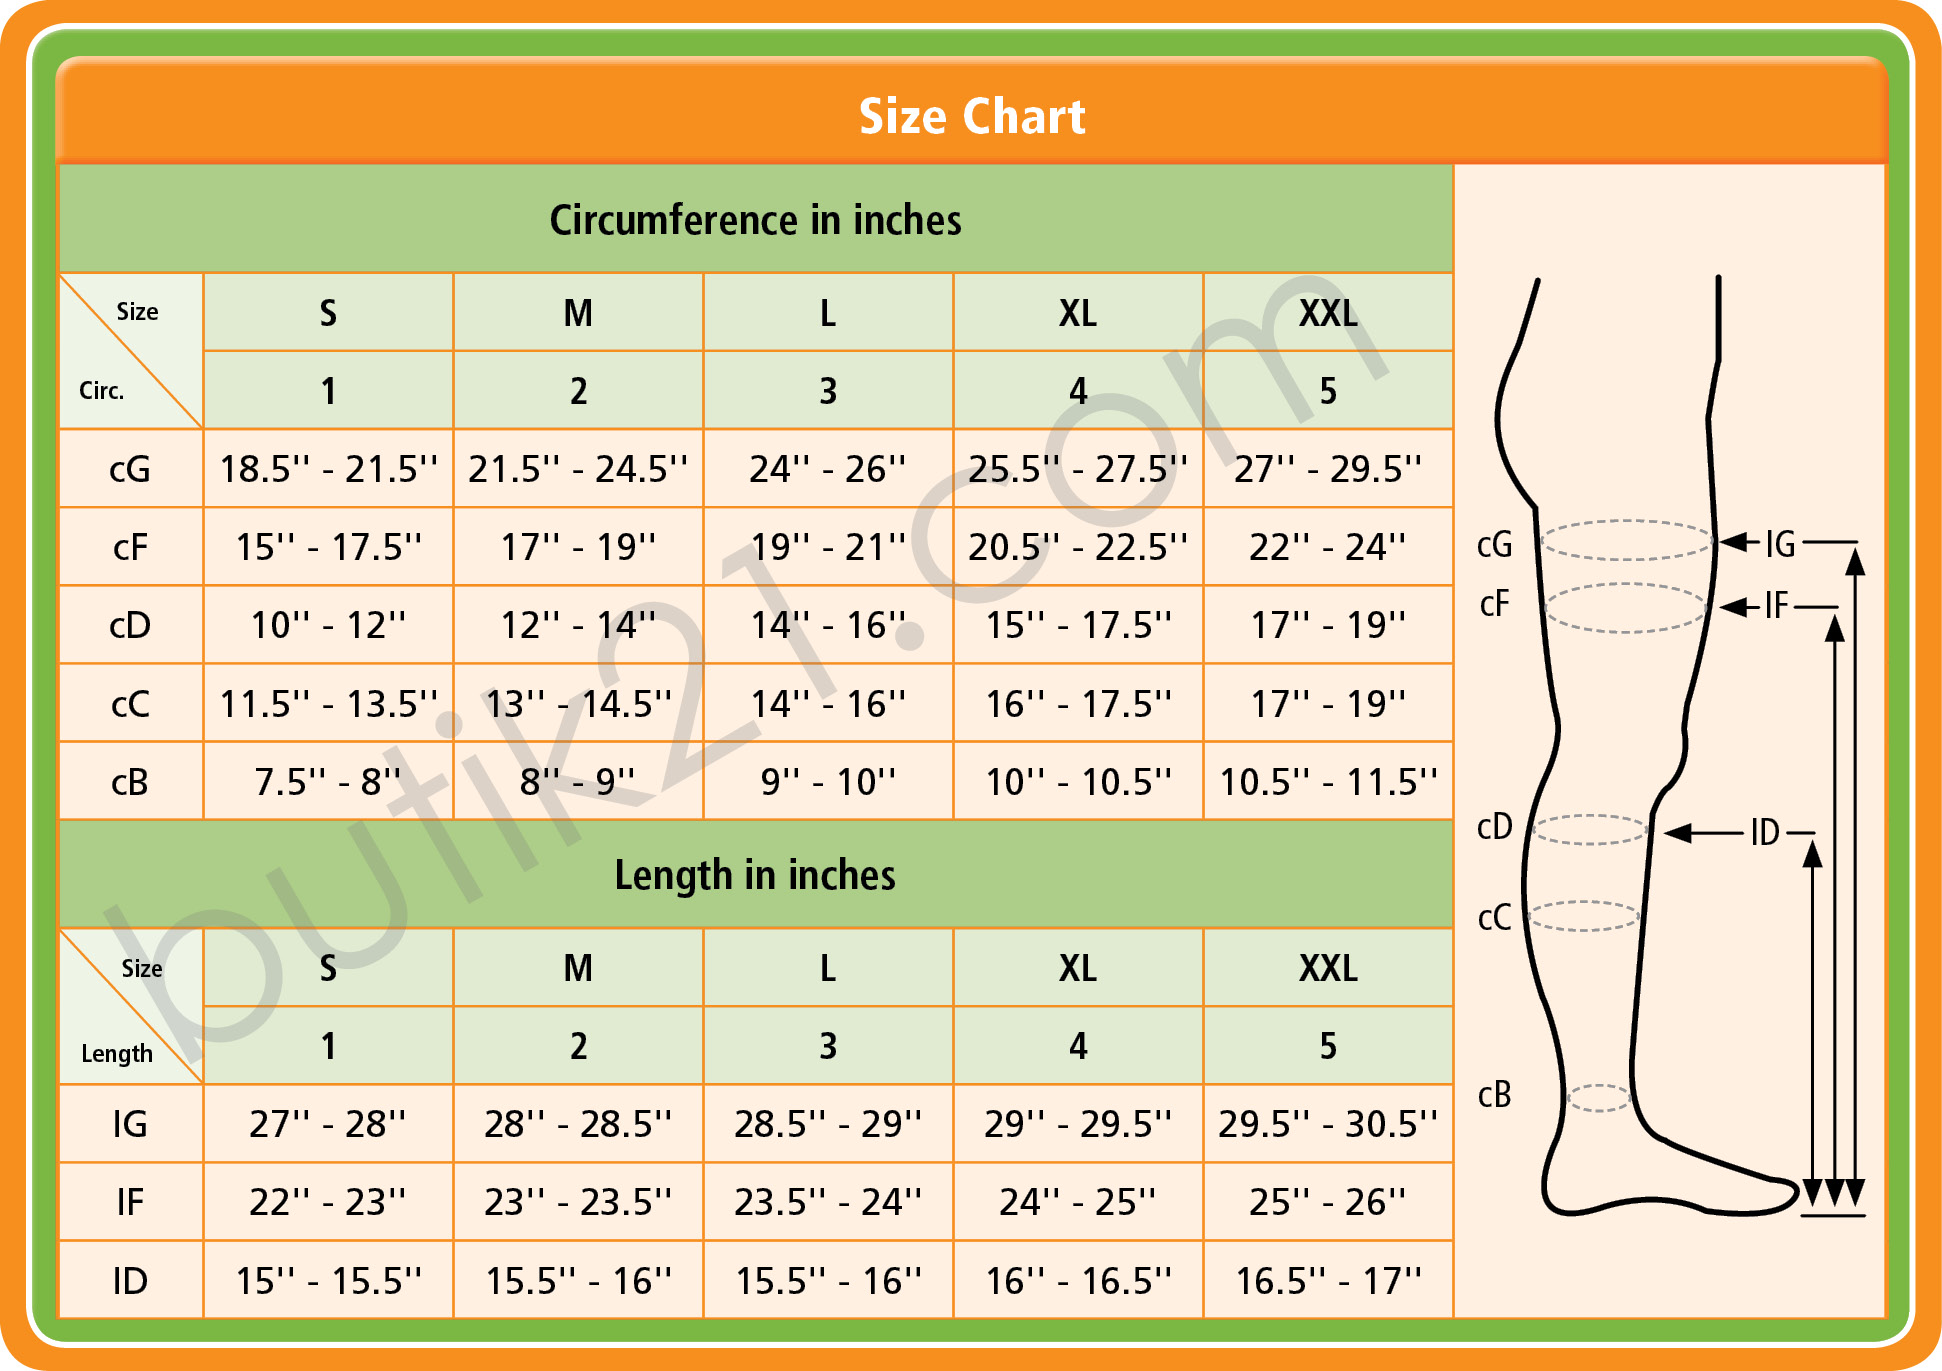 Fotgrossisten - Size chart Leggings with Compression (Compression